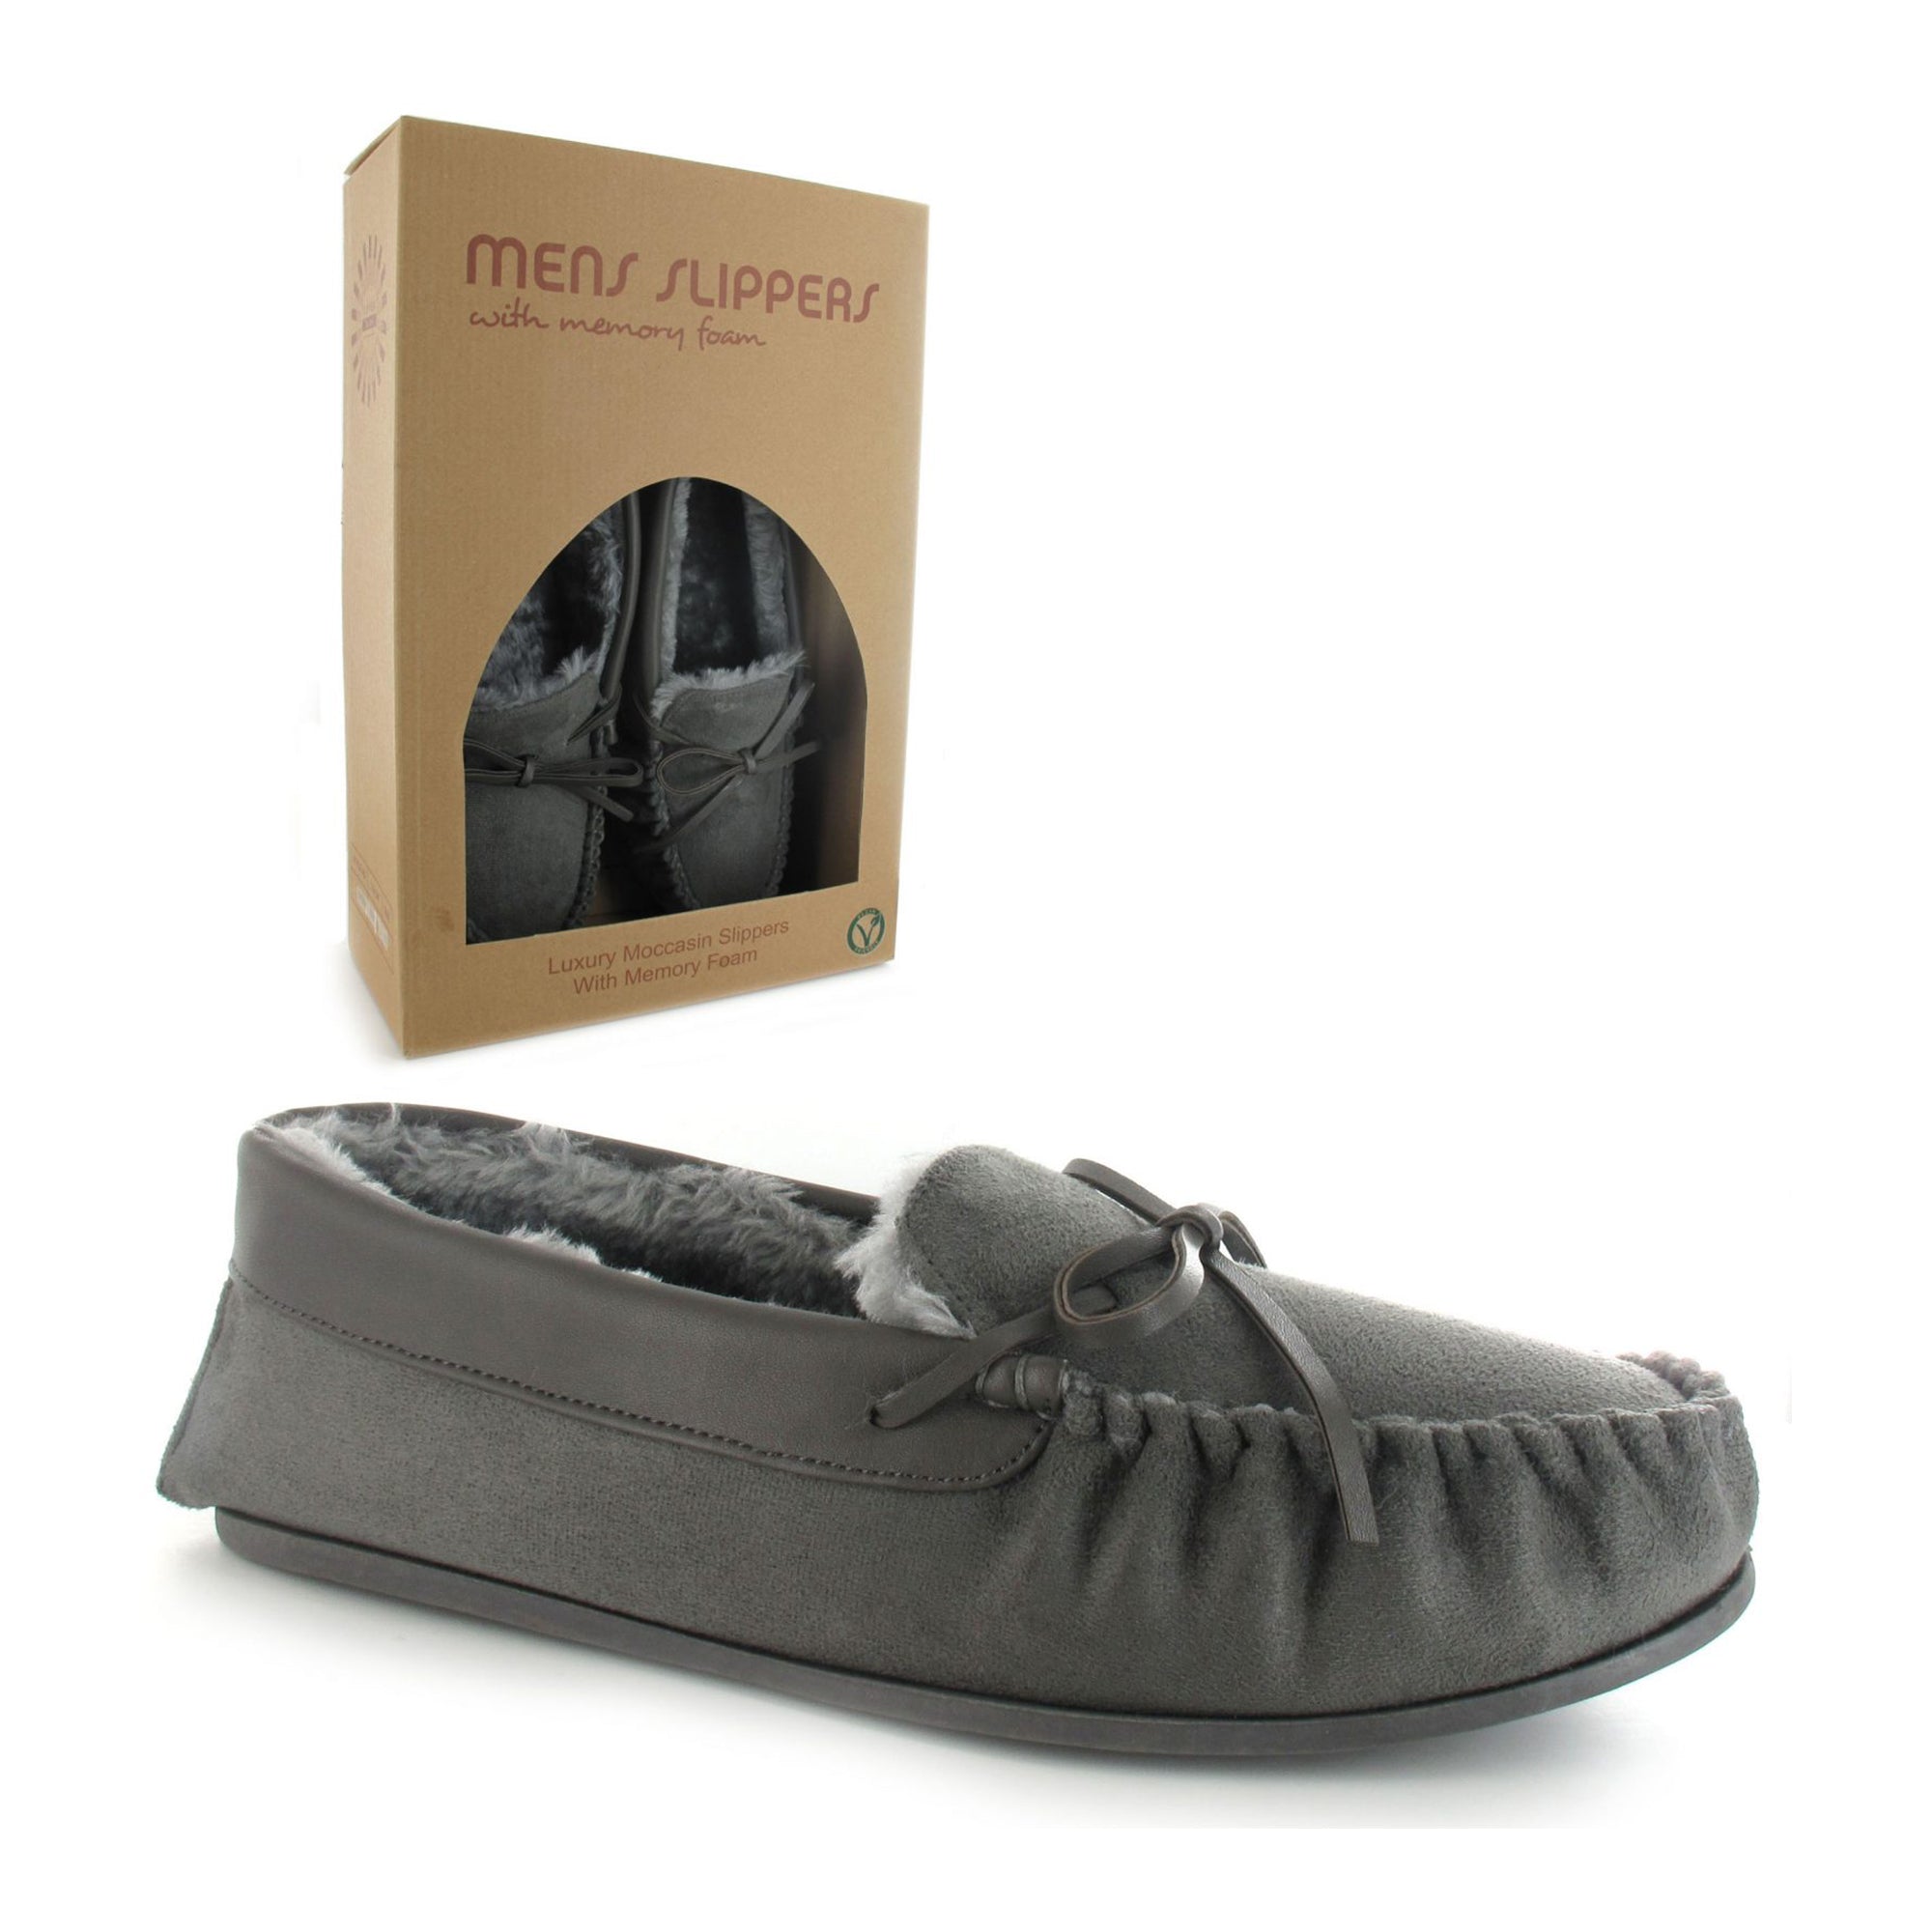 Buy AEROWALK Stylish T-Shape Fashion Sandal/Slipper for Men | Comfortable |  Lightweight | Anti Skid | Casual Office Footwear (NV58_BROWN_40) at  Amazon.in